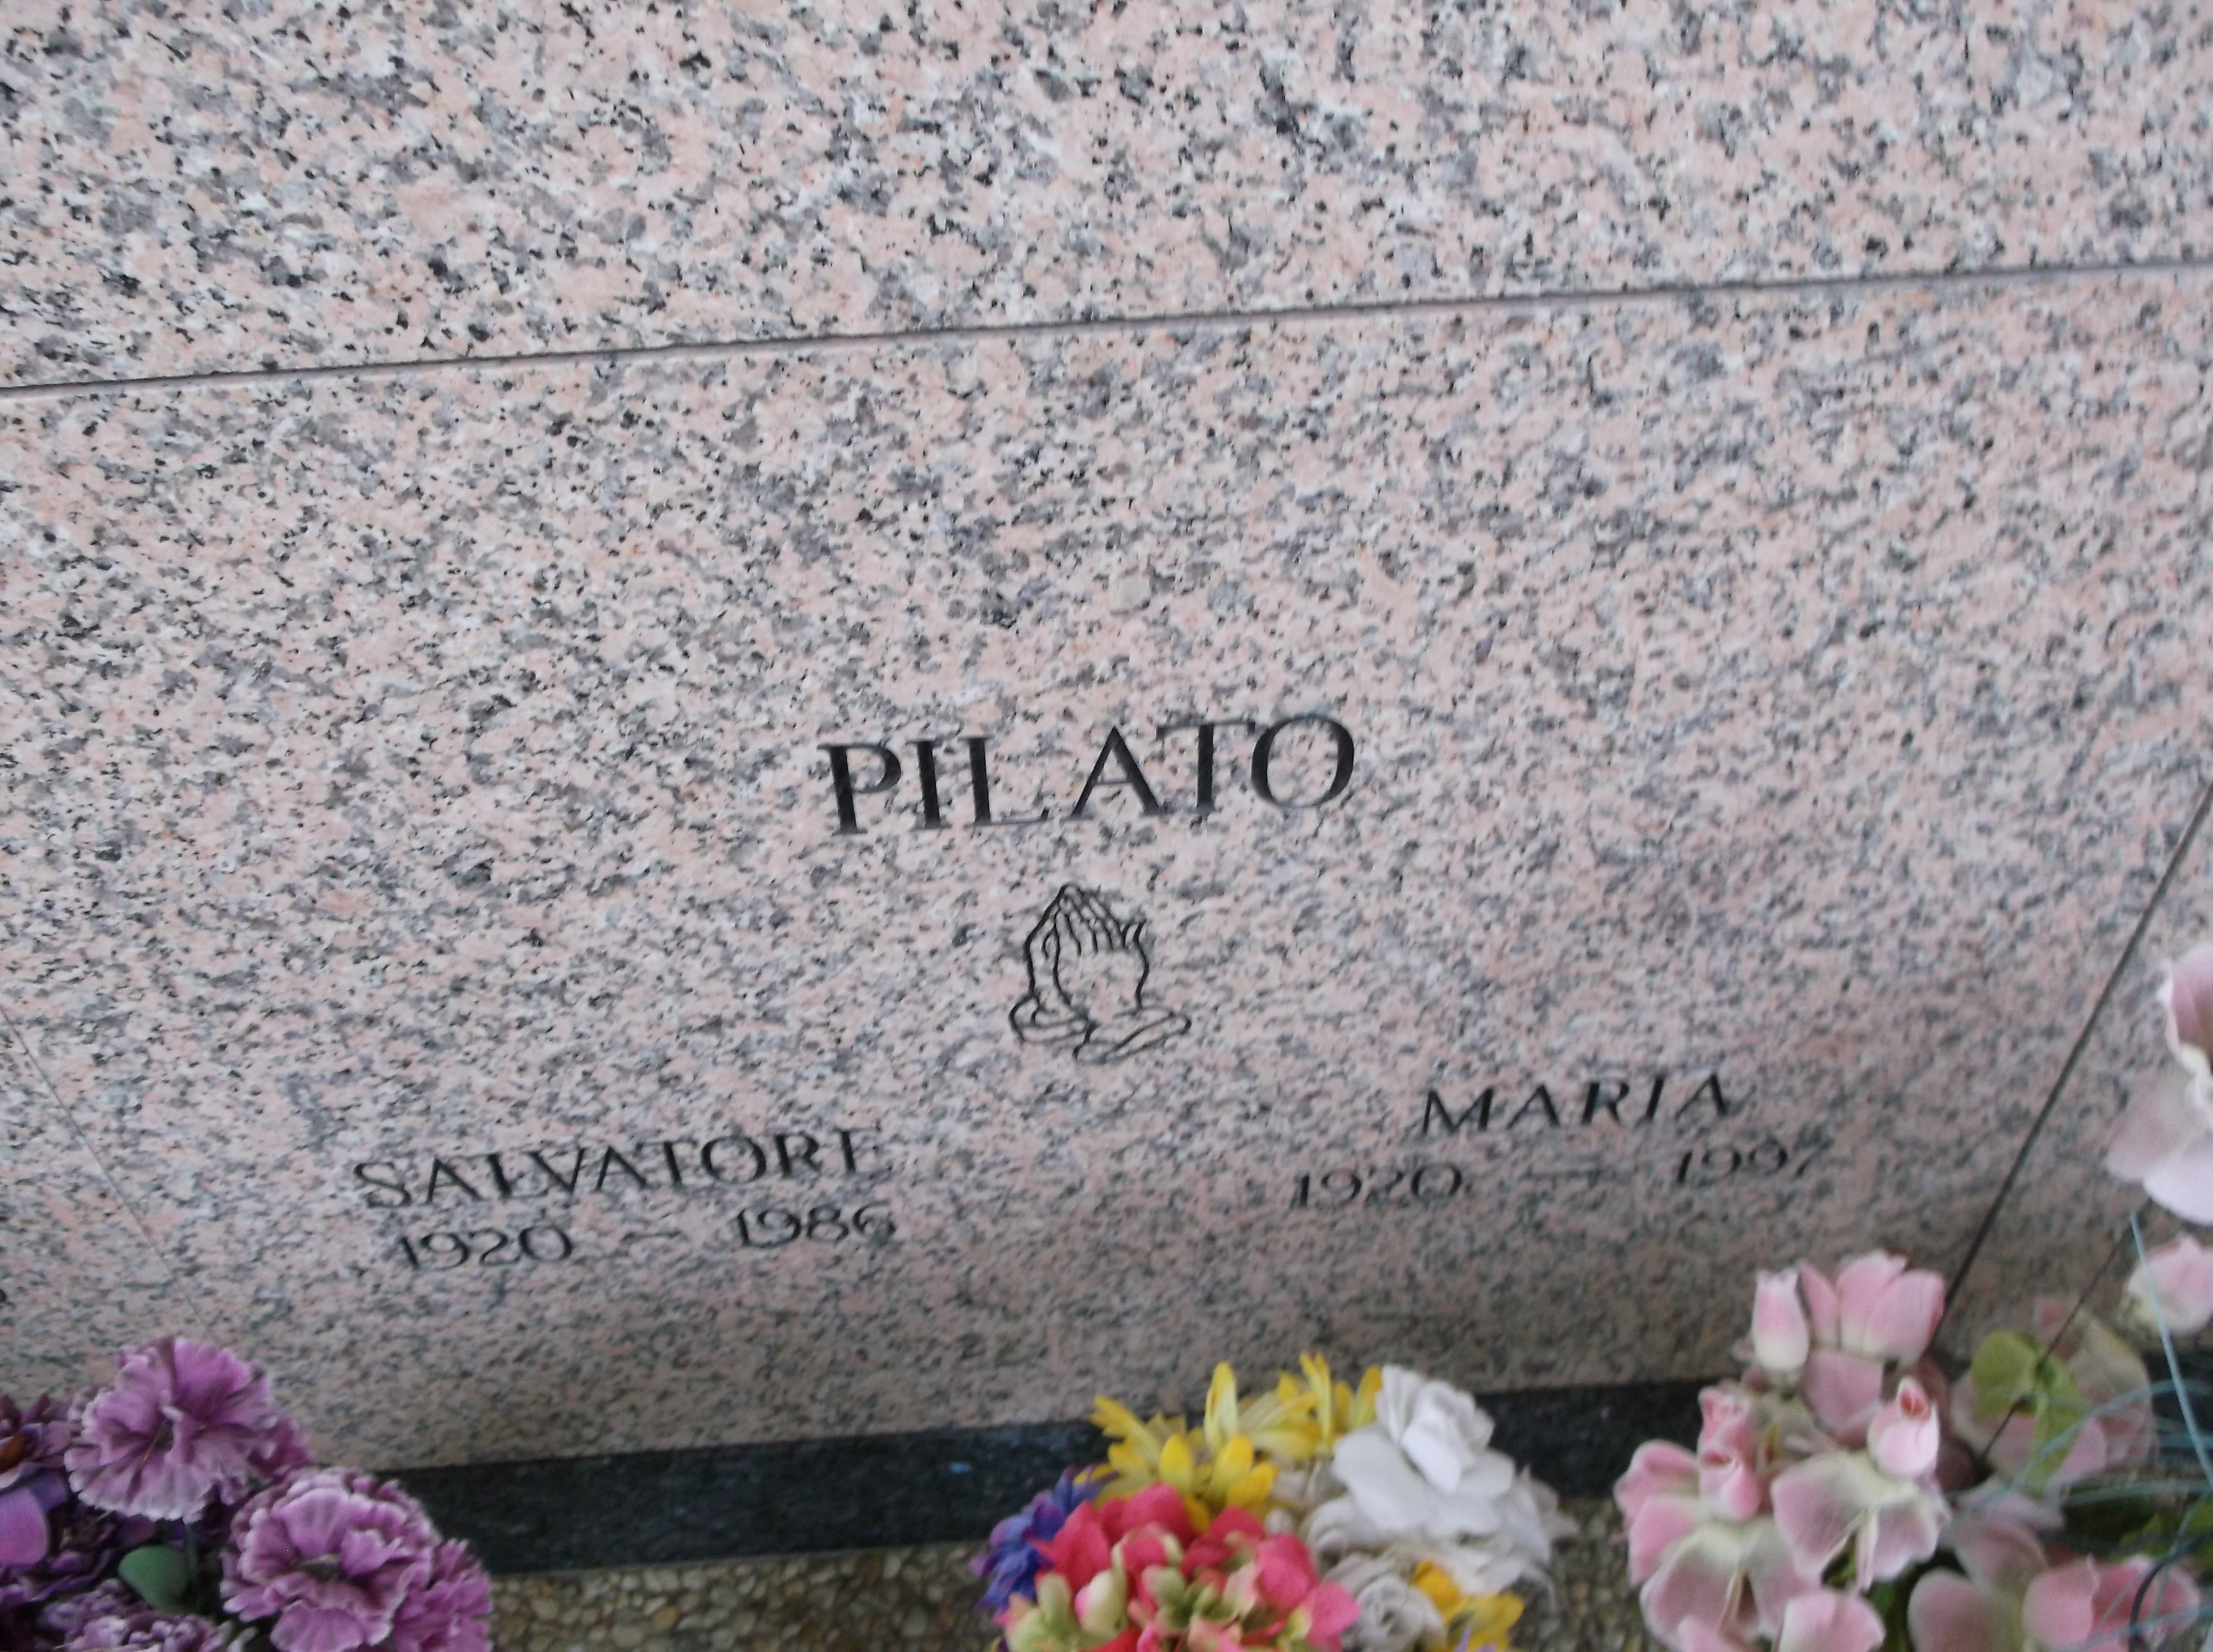 Maria Pilato